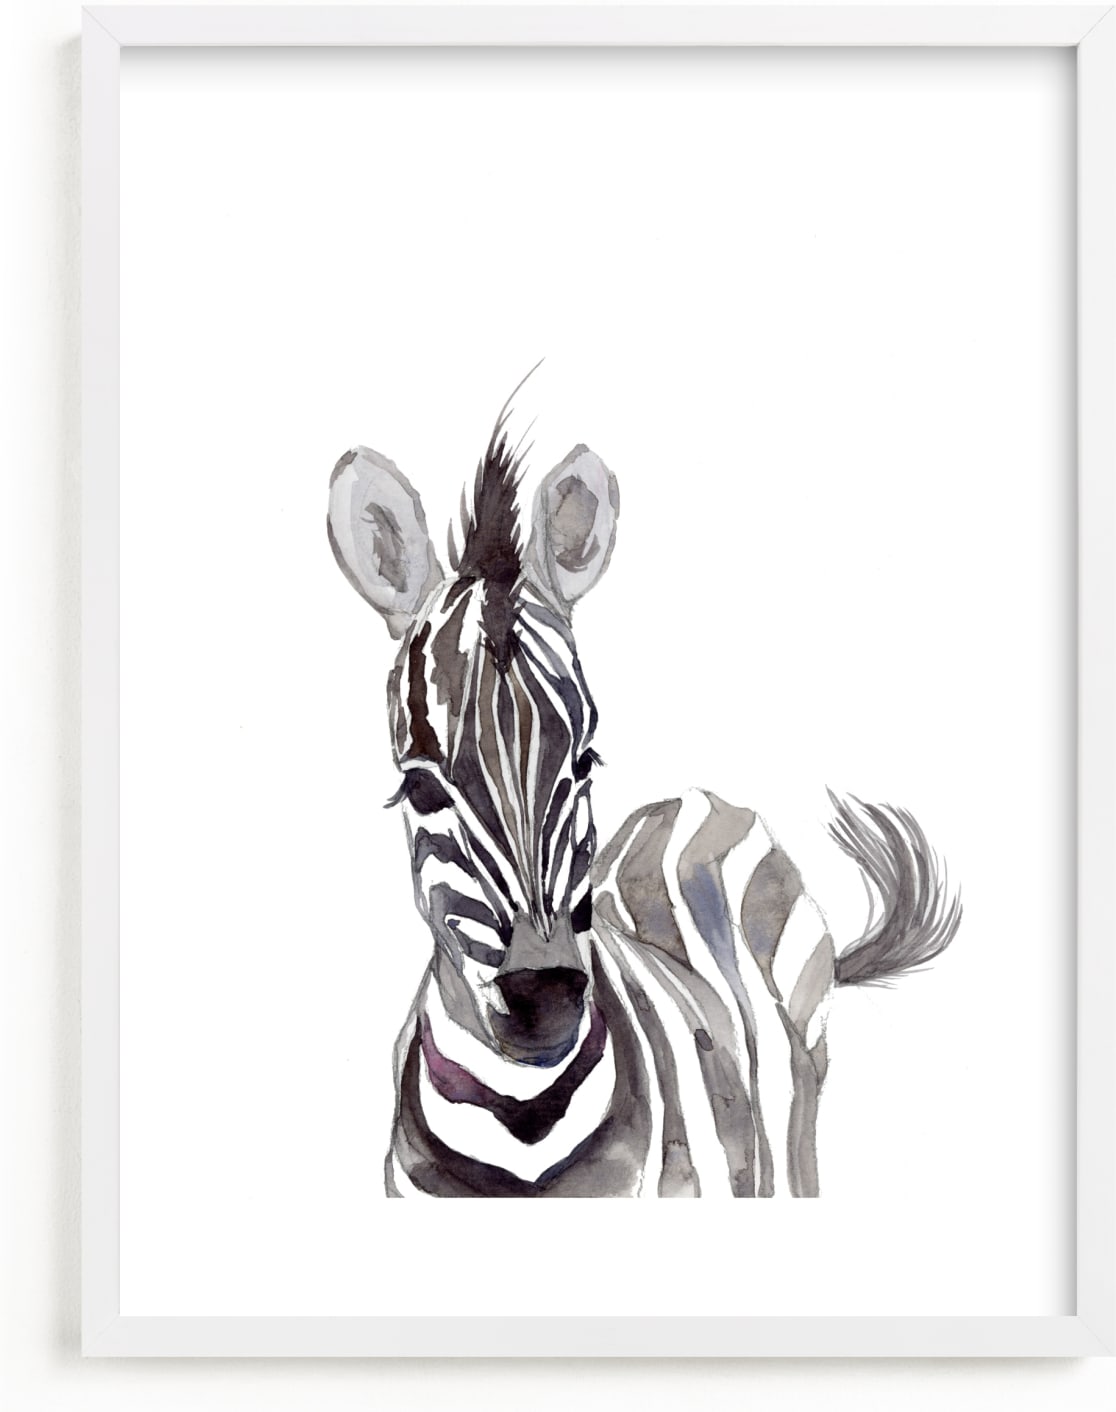 This is a white nursery wall art by Jieun K Rasband called Baby Animal Friends: Zebra.